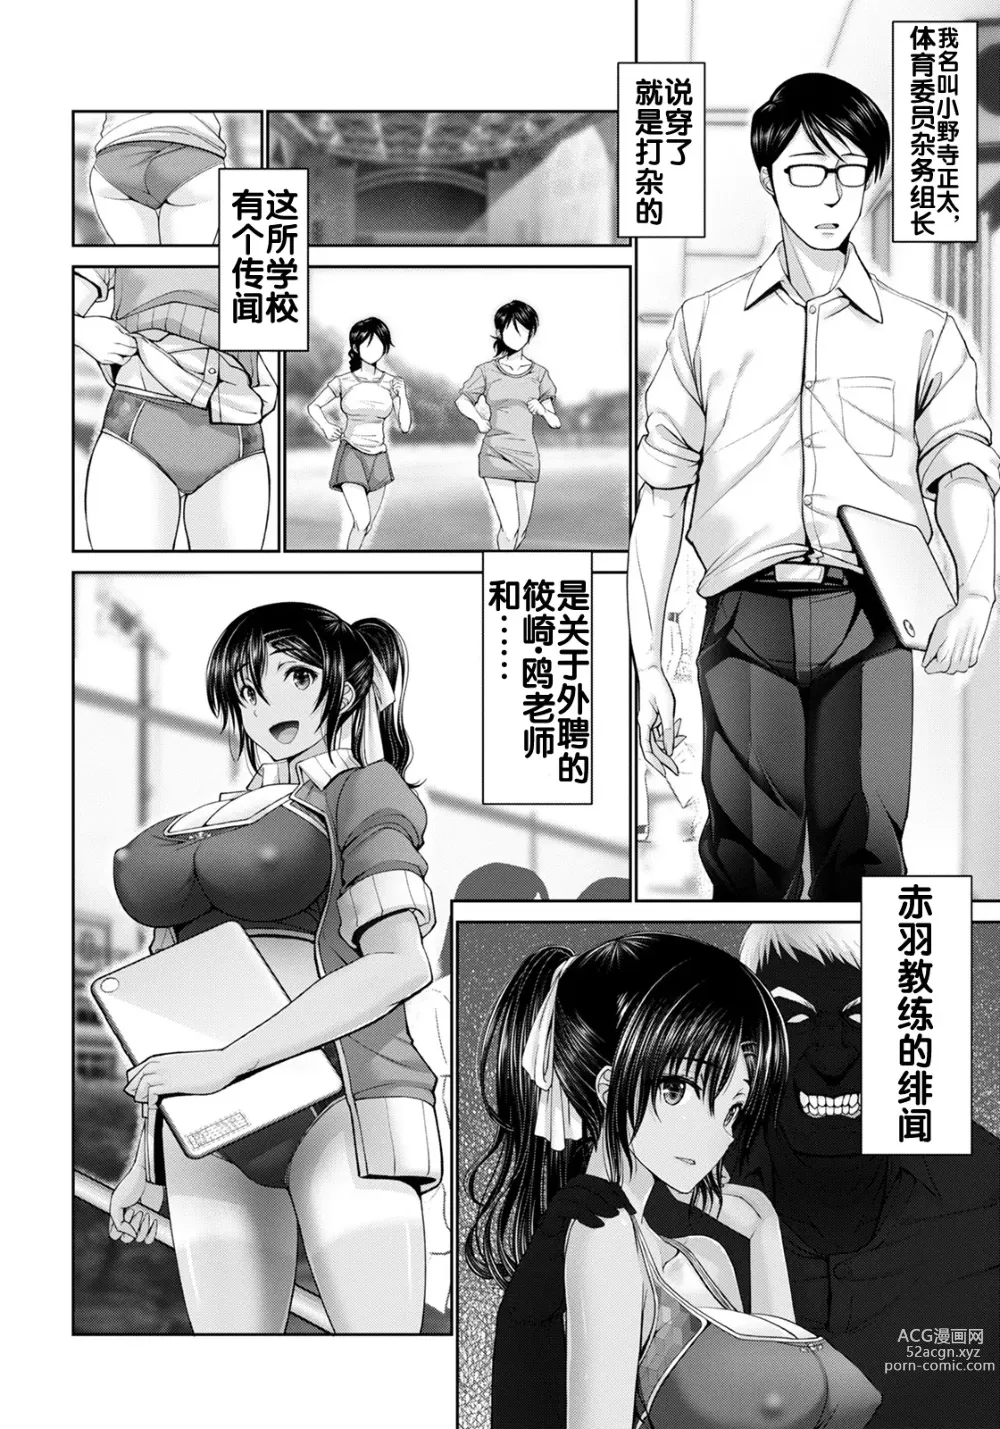 Page 7 of manga Seishun Taiiku Kyoushi